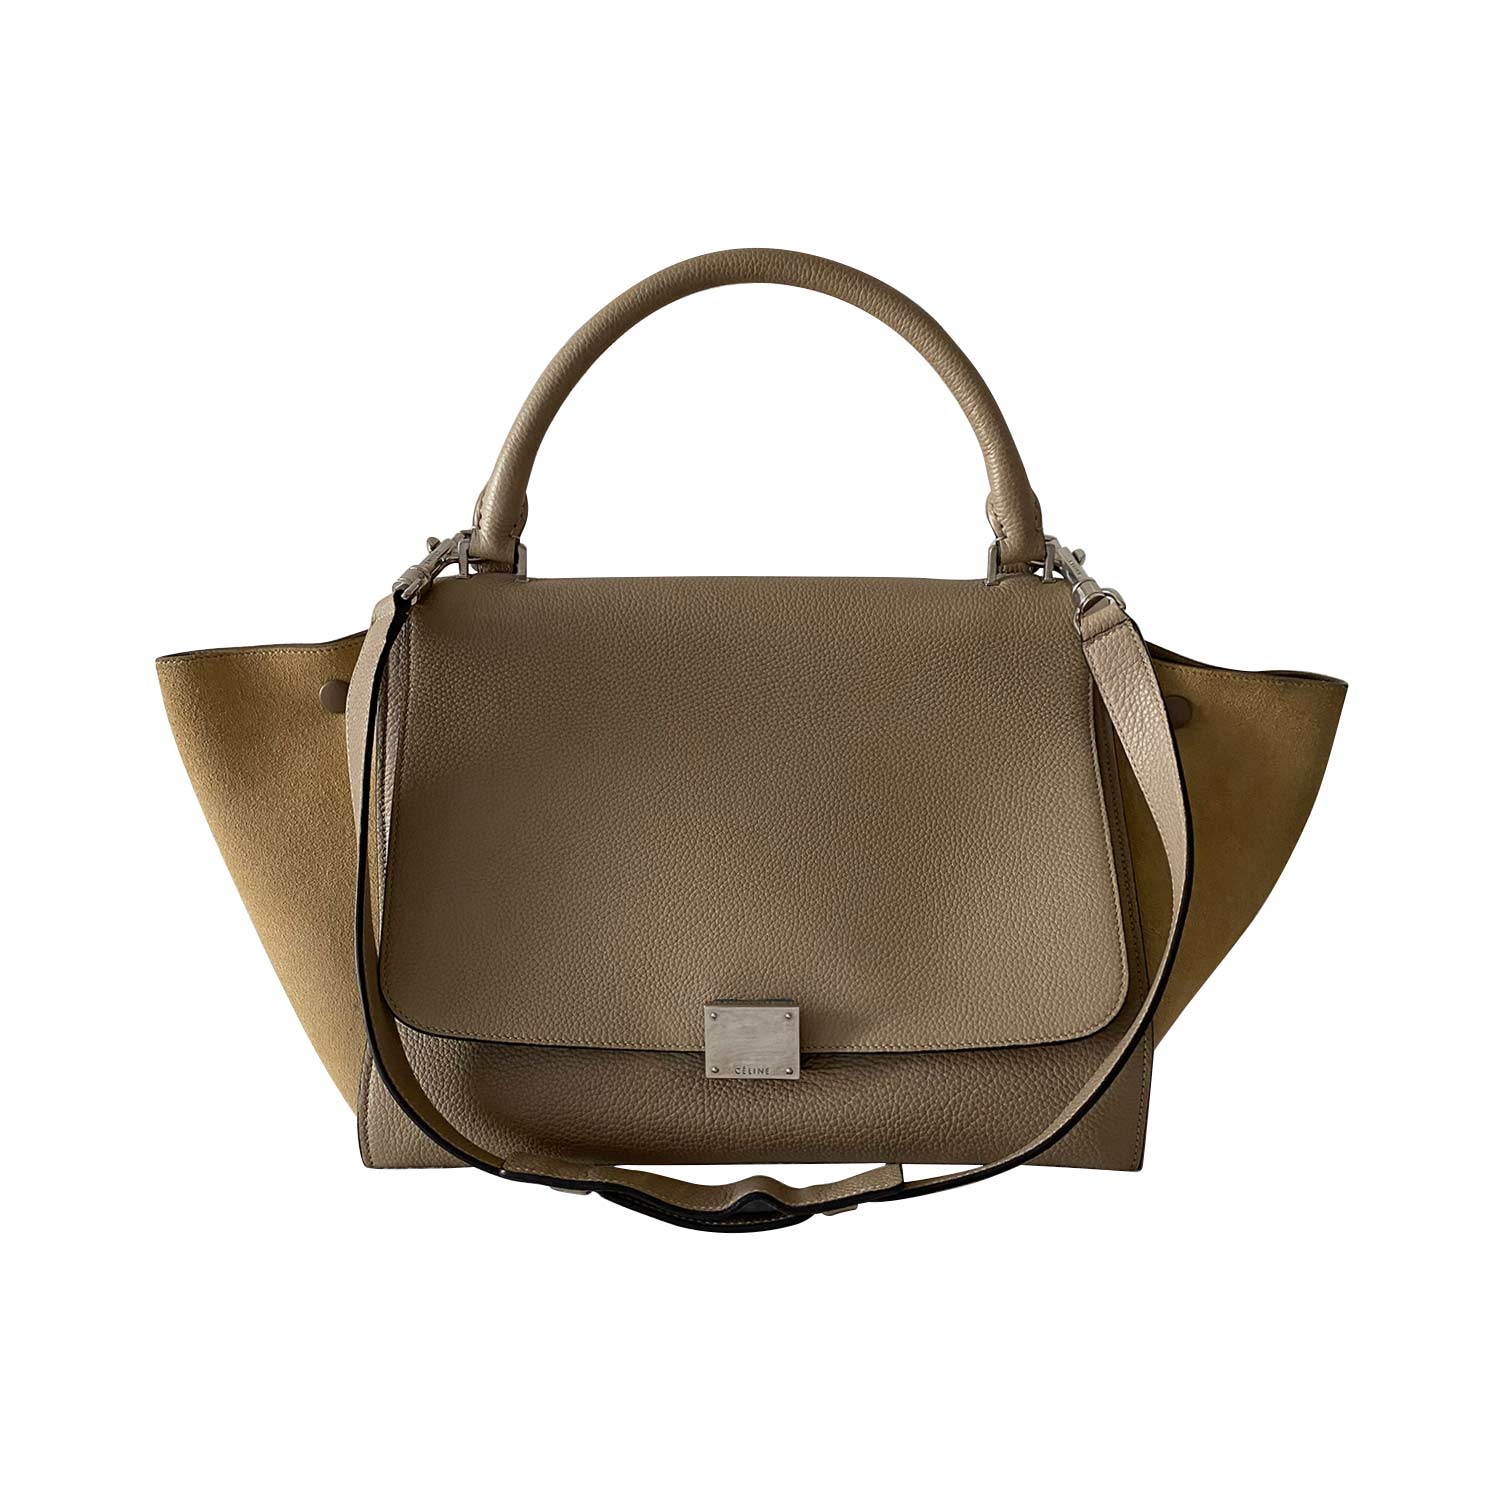 Shop authentic Celine Medium Trapeze Bag at revogue for just USD 800.00